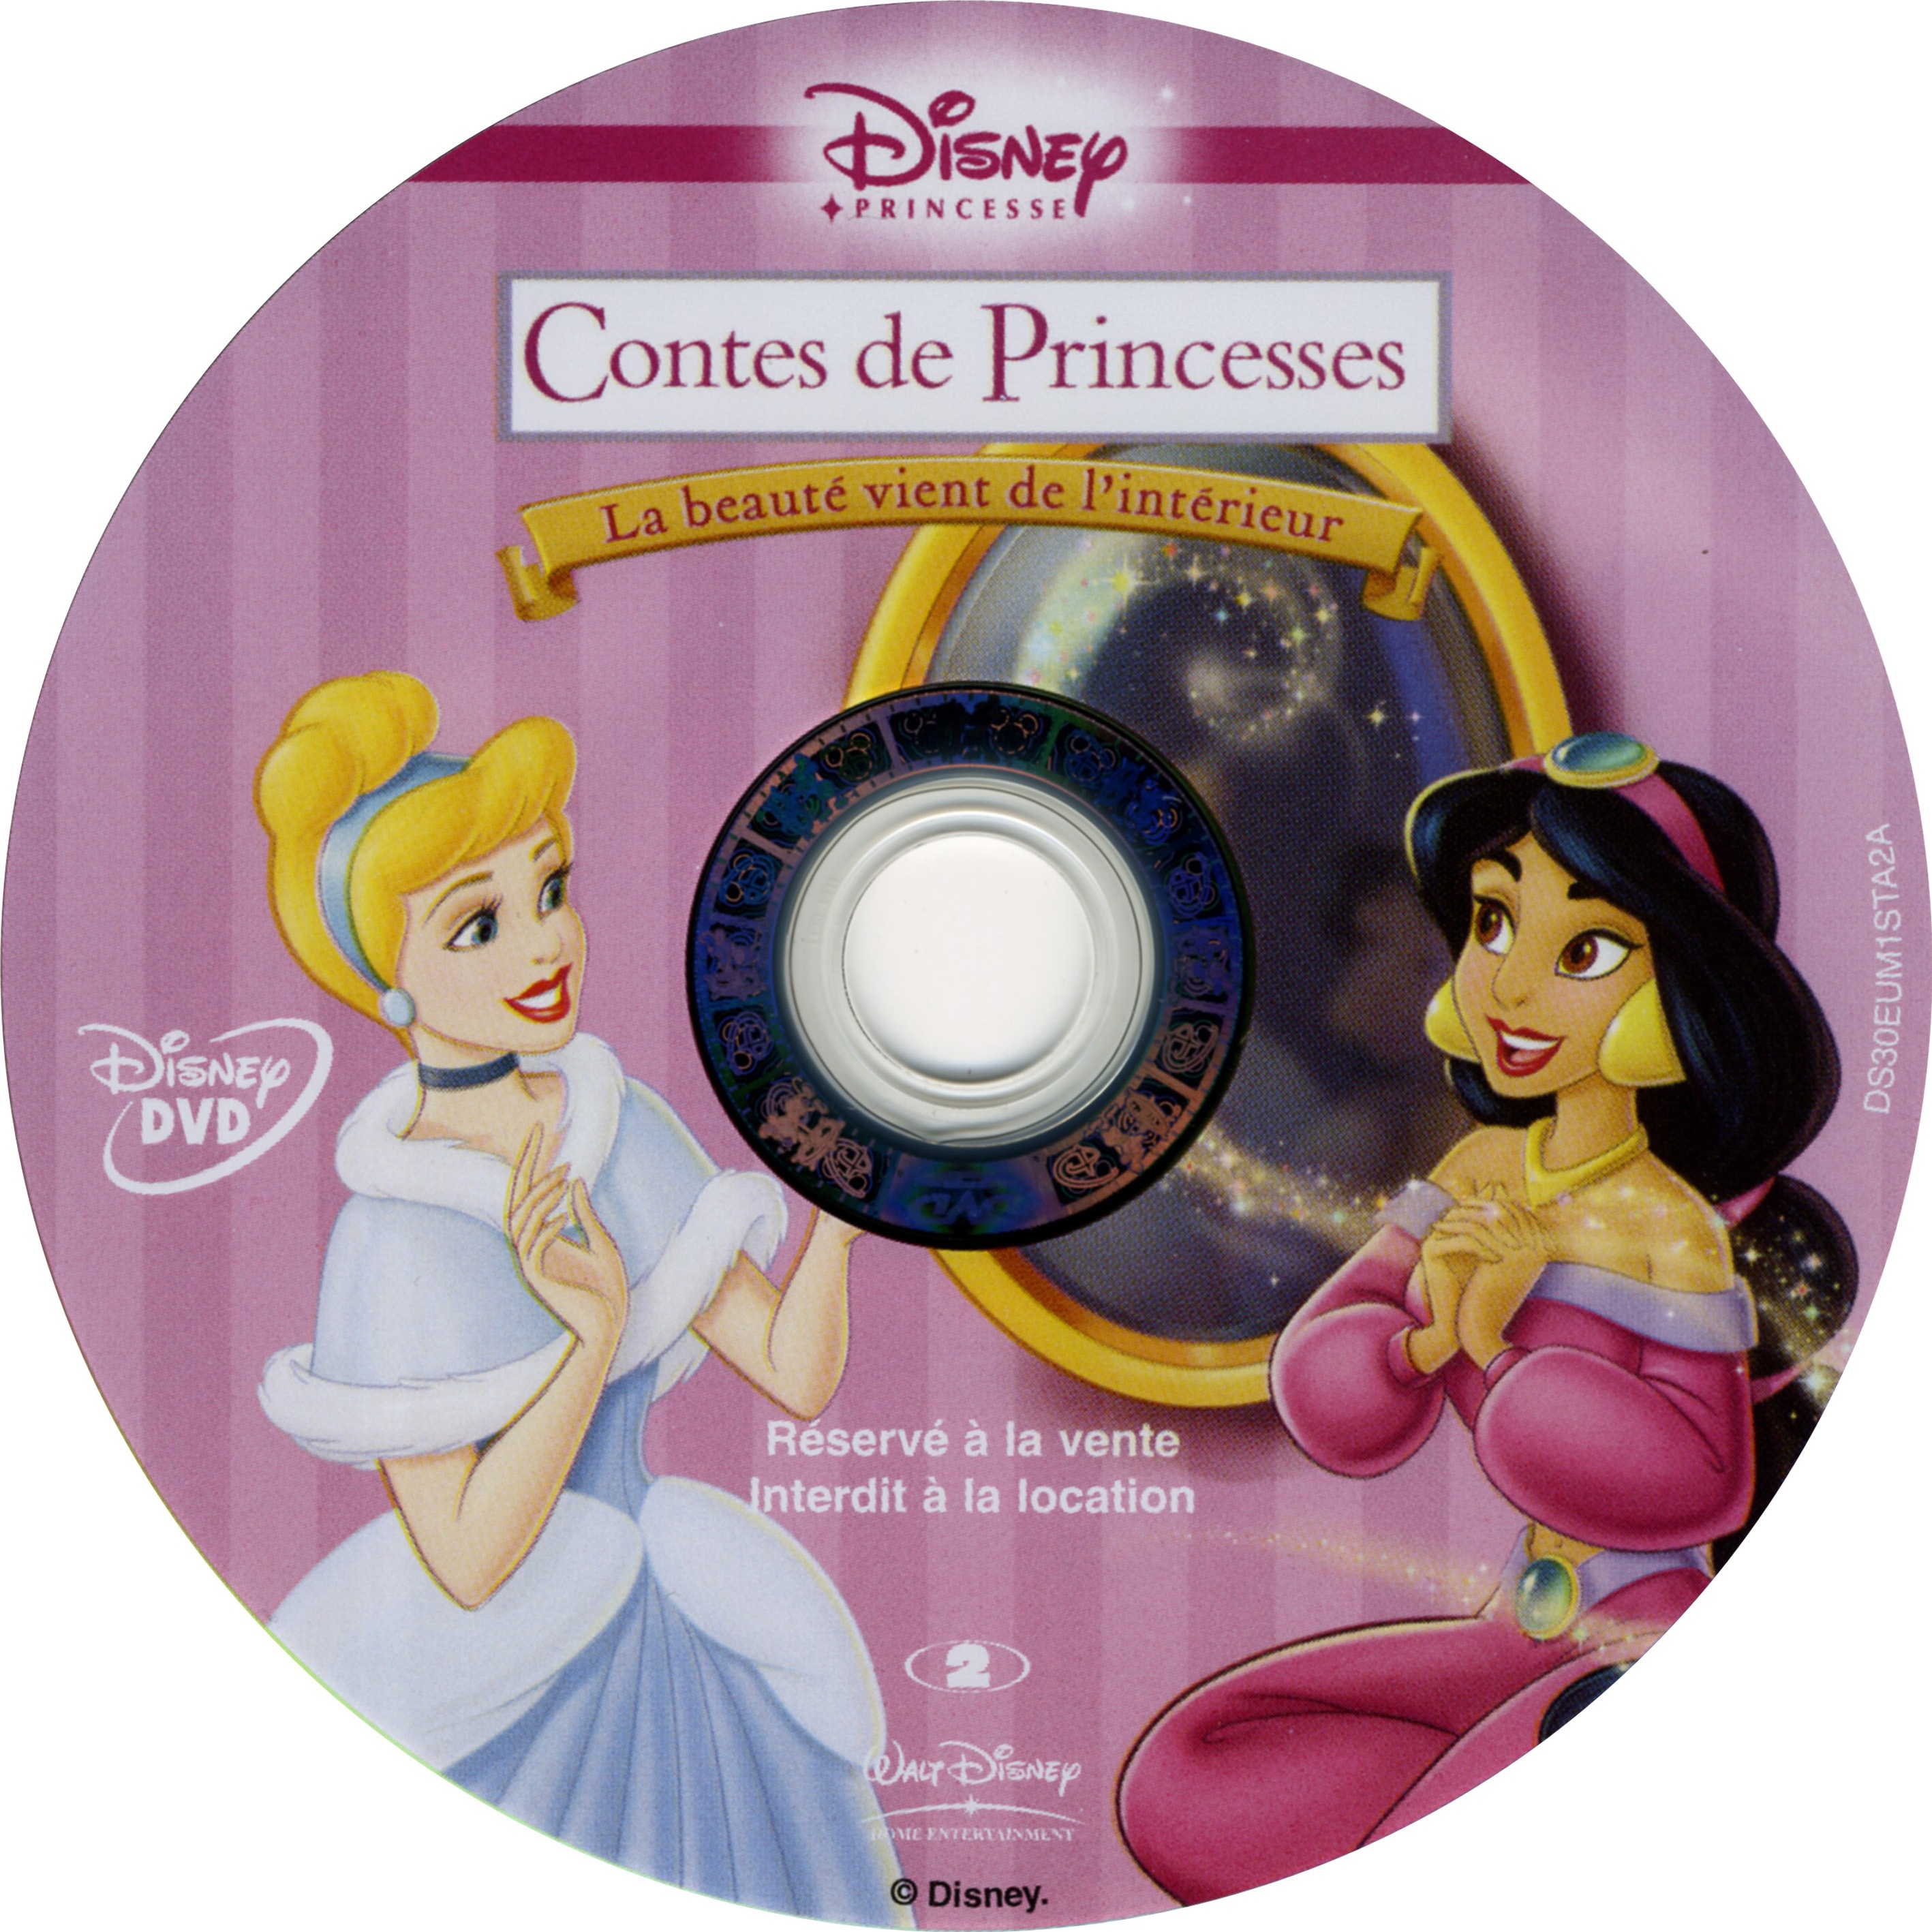 Contes de princesses - La beaut vient de l